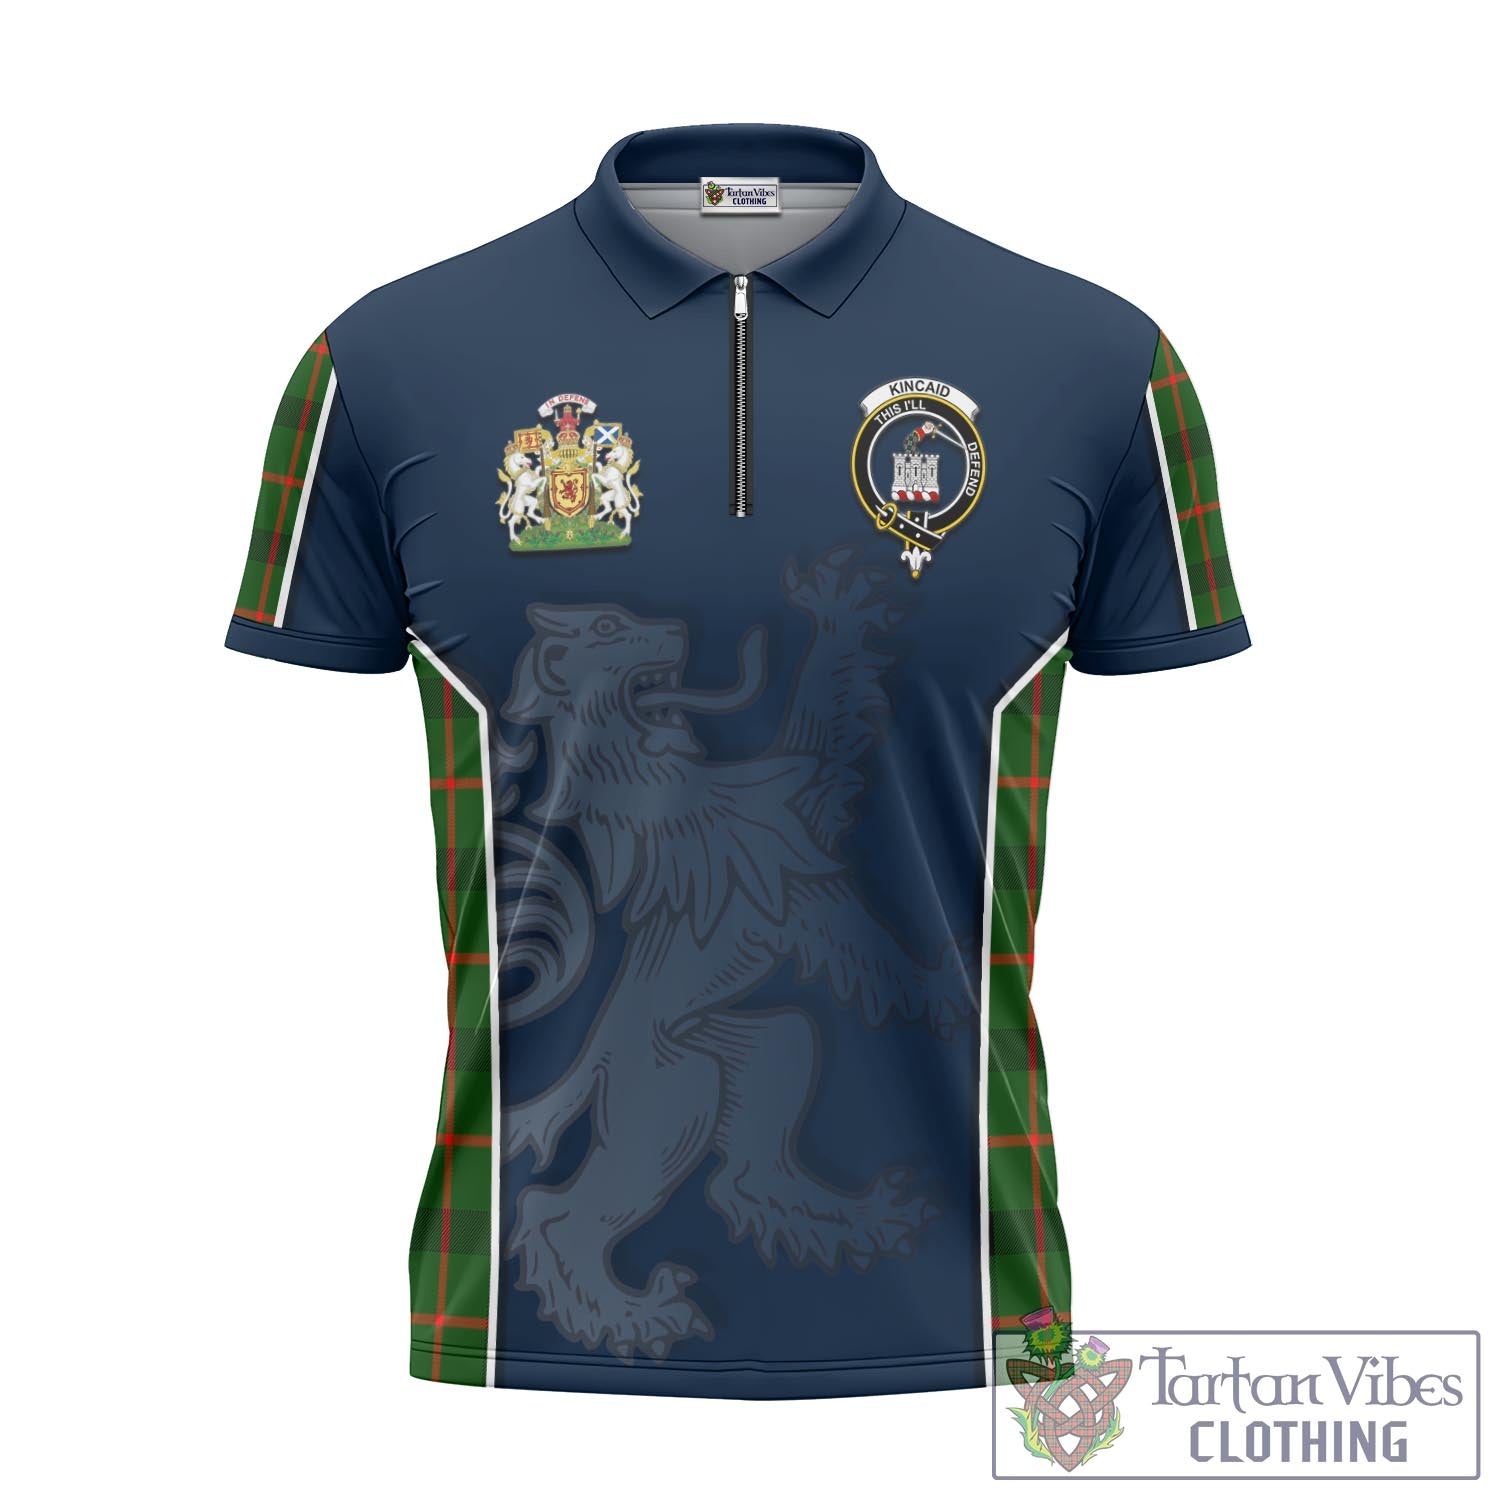 Tartan Vibes Clothing Kincaid Modern Tartan Zipper Polo Shirt with Family Crest and Lion Rampant Vibes Sport Style